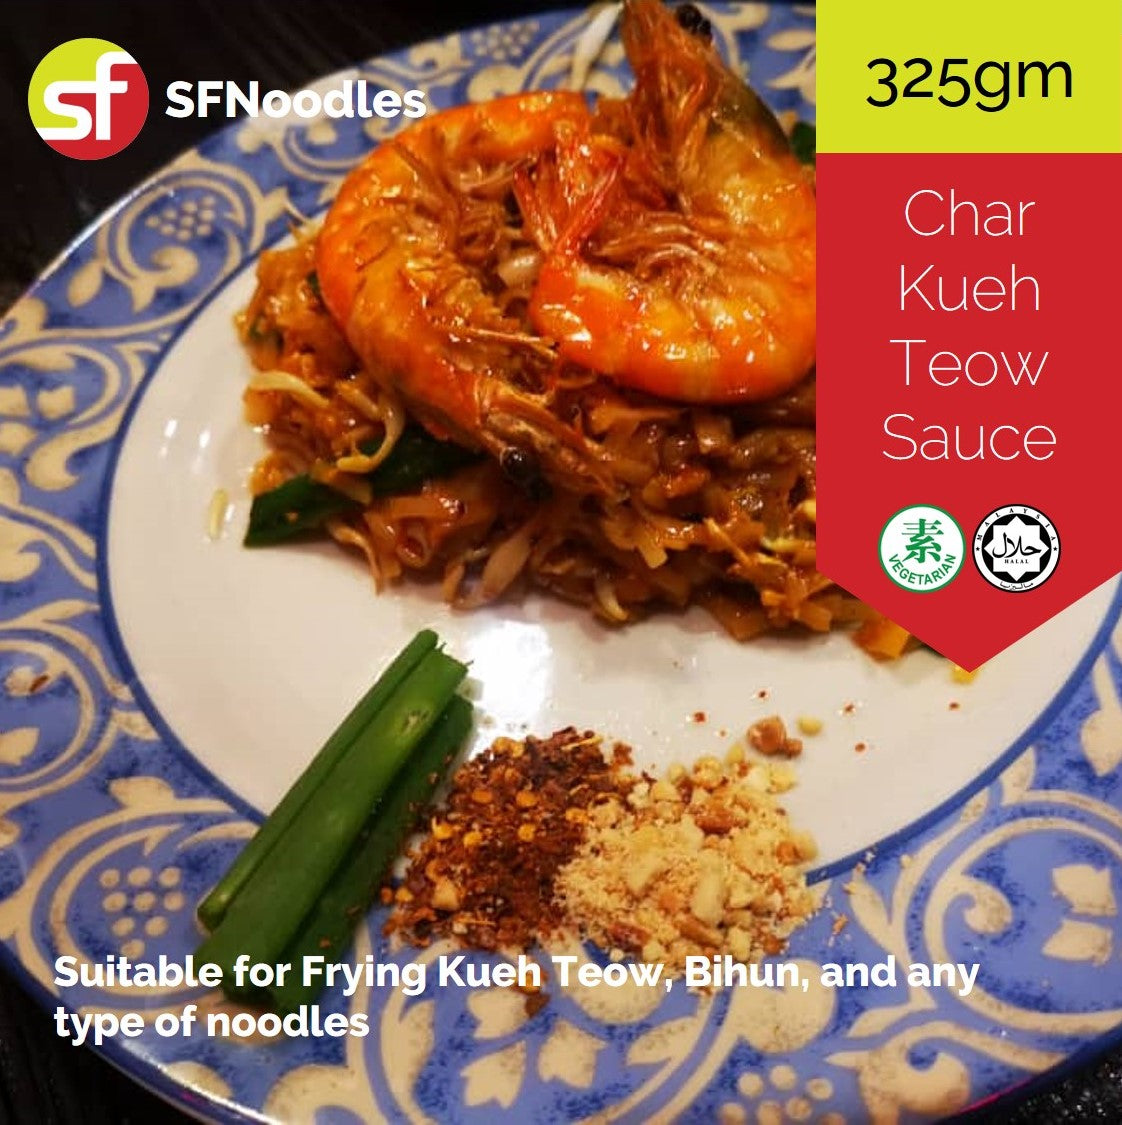 FatBoy Char Kueh Teow Sauce (槟城炒果条酱油)